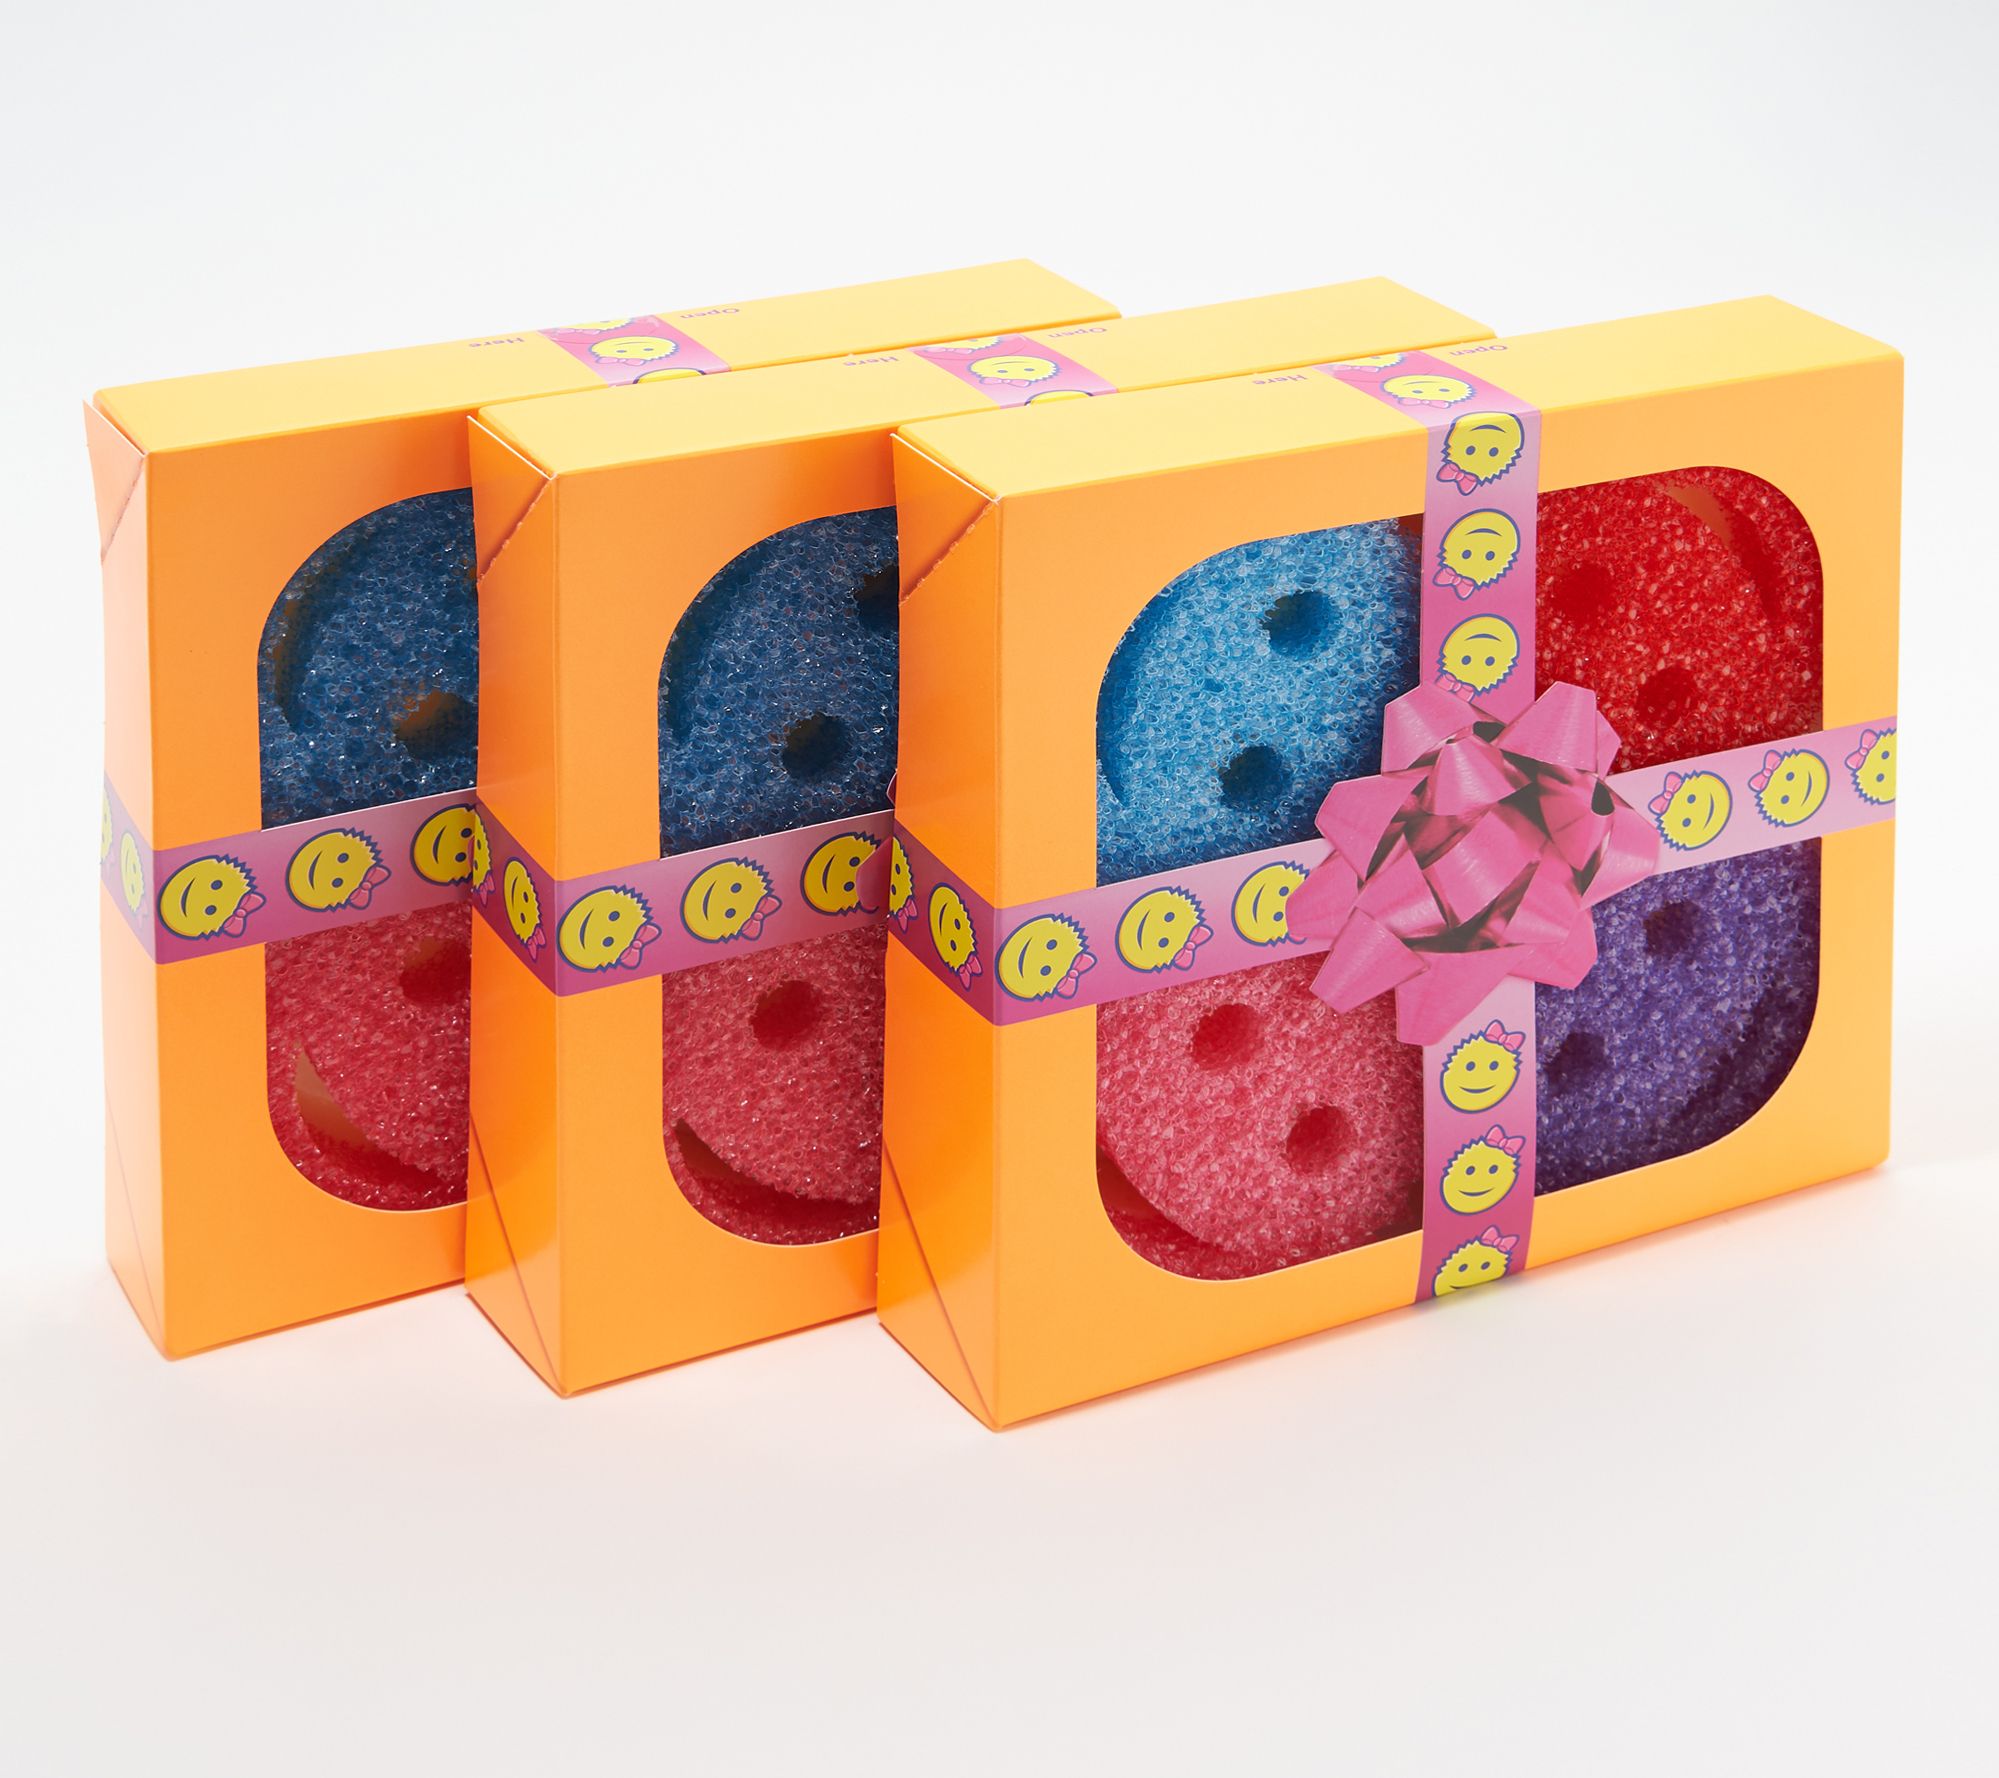 Scrub Daddy Gift Set - 3 pack Scrub Daddy with holder – The Pink Stuff